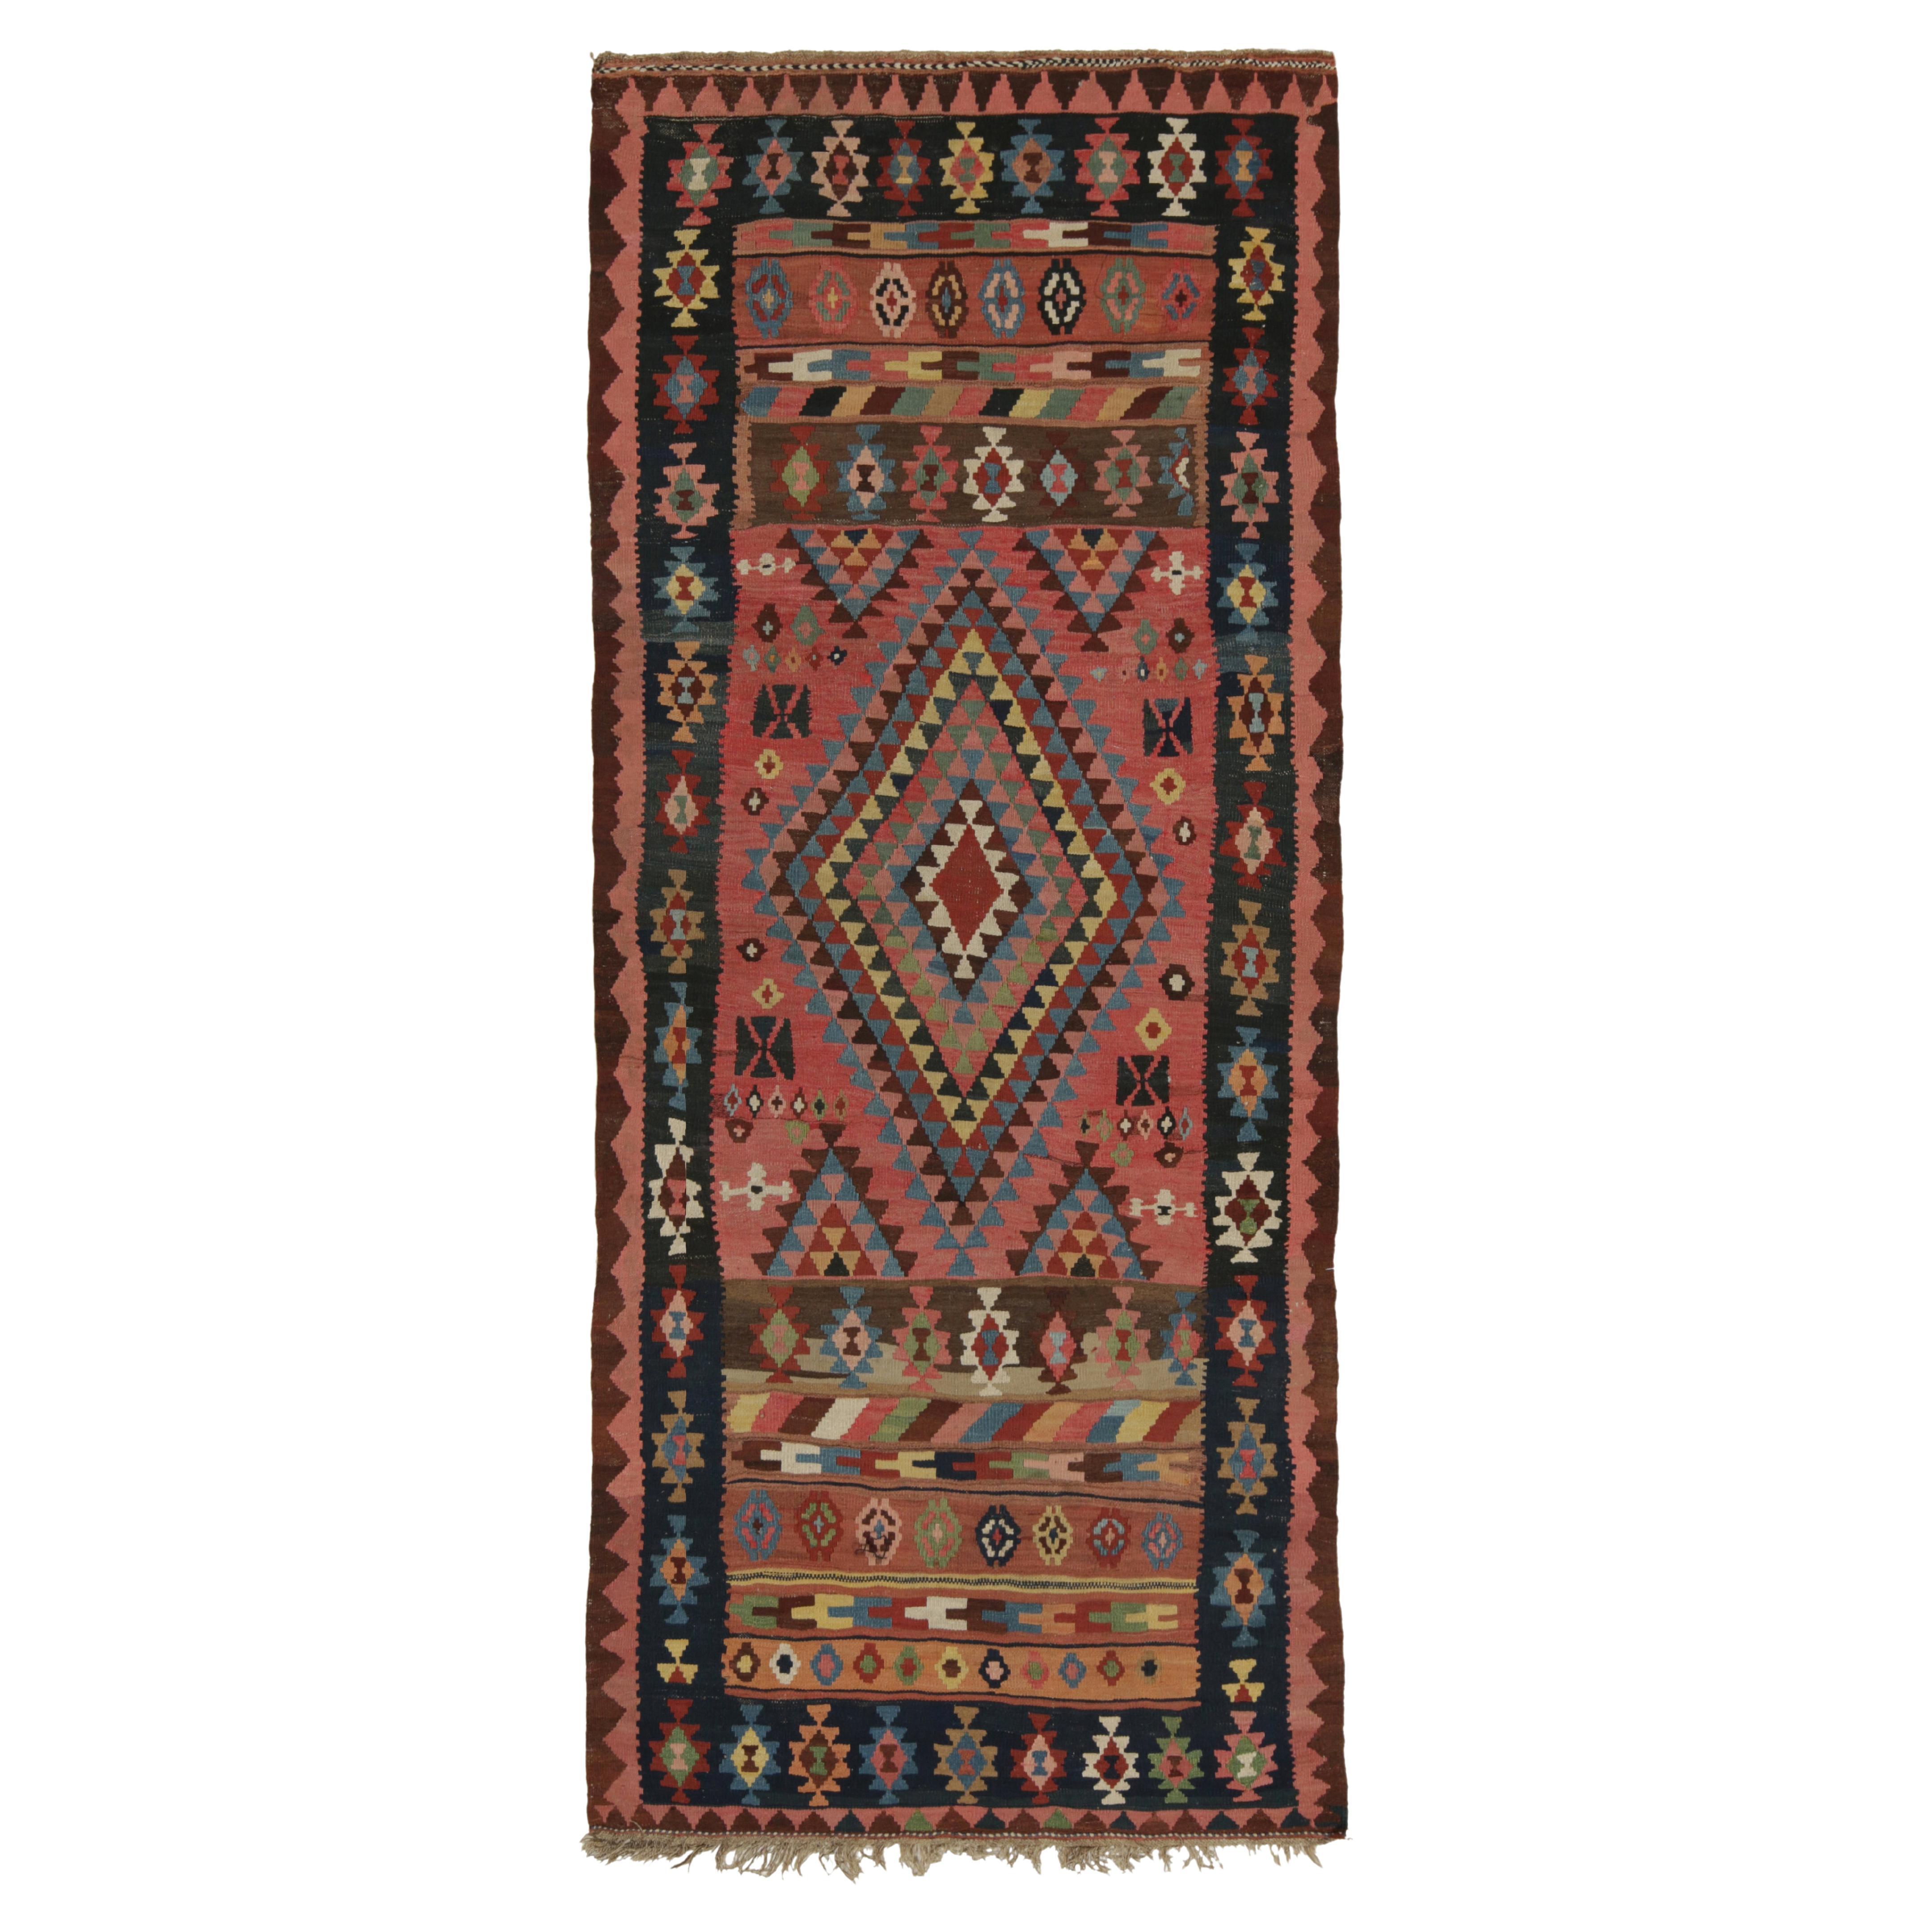 Vintage Persian Kilim rug in Pink with Geometric Patterns